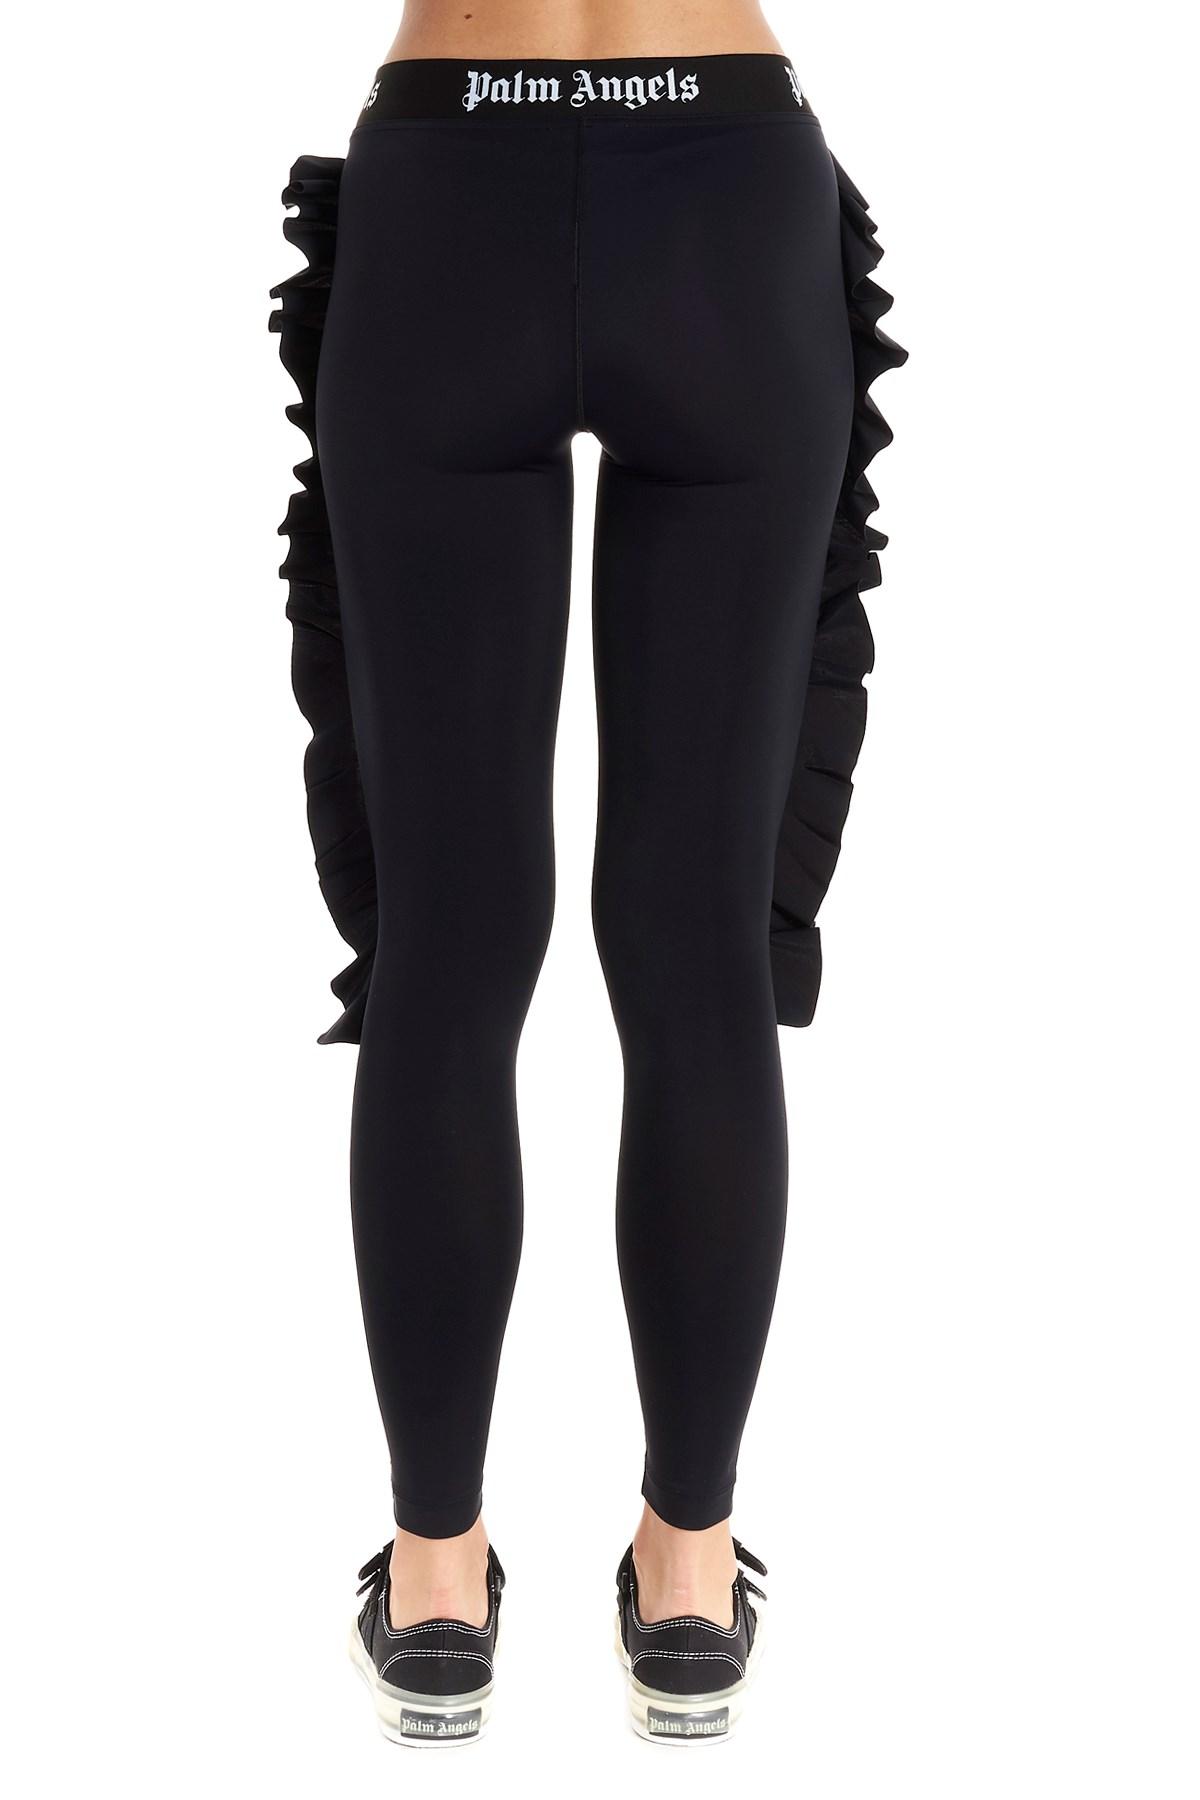 Palm Angels Synthetic Ruffles leggings in Black - Lyst